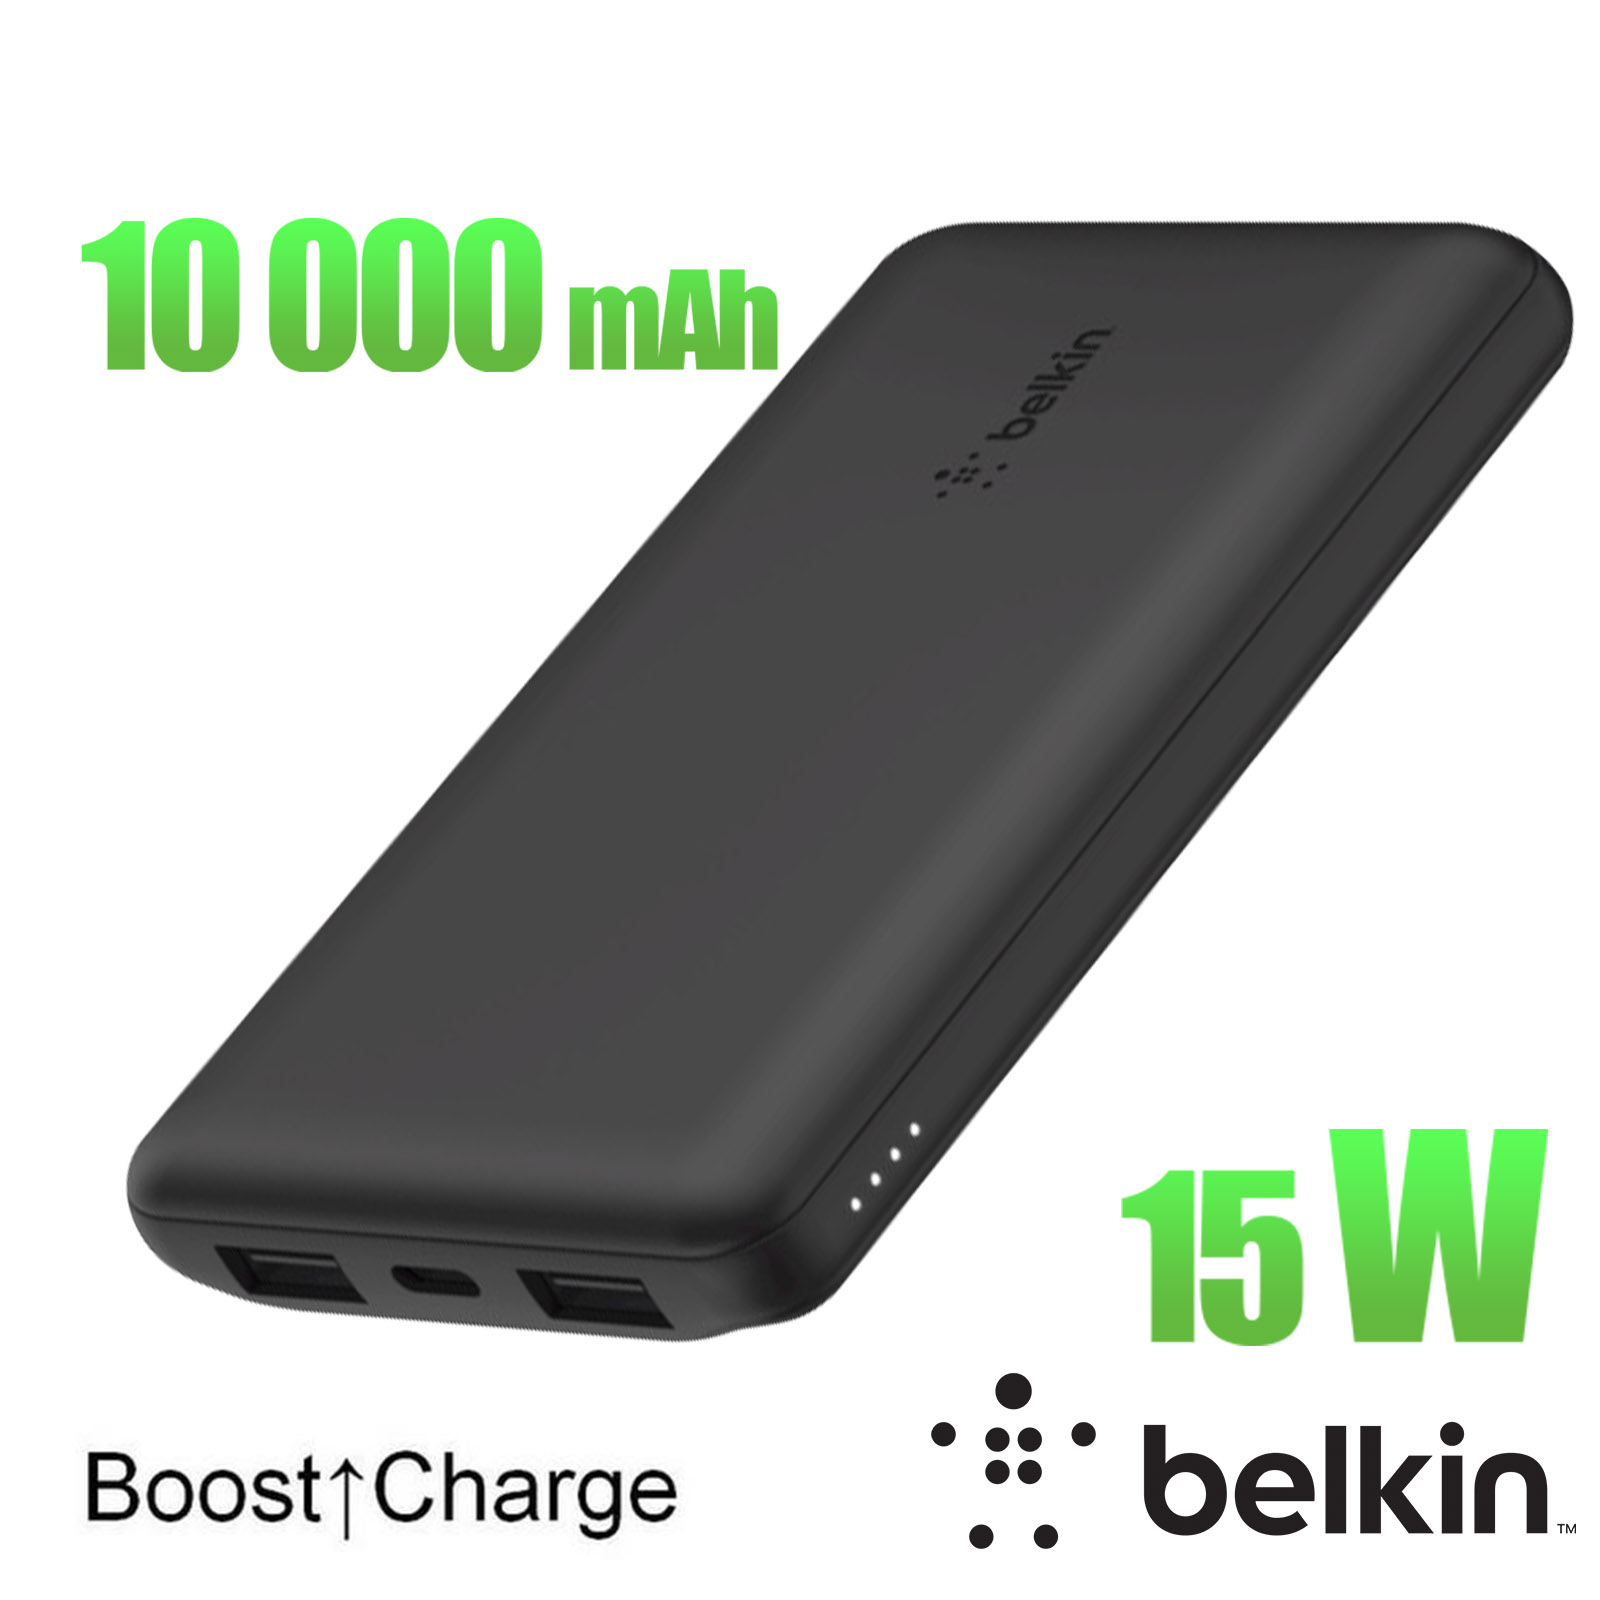 Bateria Externa Belkin, Carga rápida, 10.000 mAh, USB-C, 2 USB-A -   - Tecnología para todos